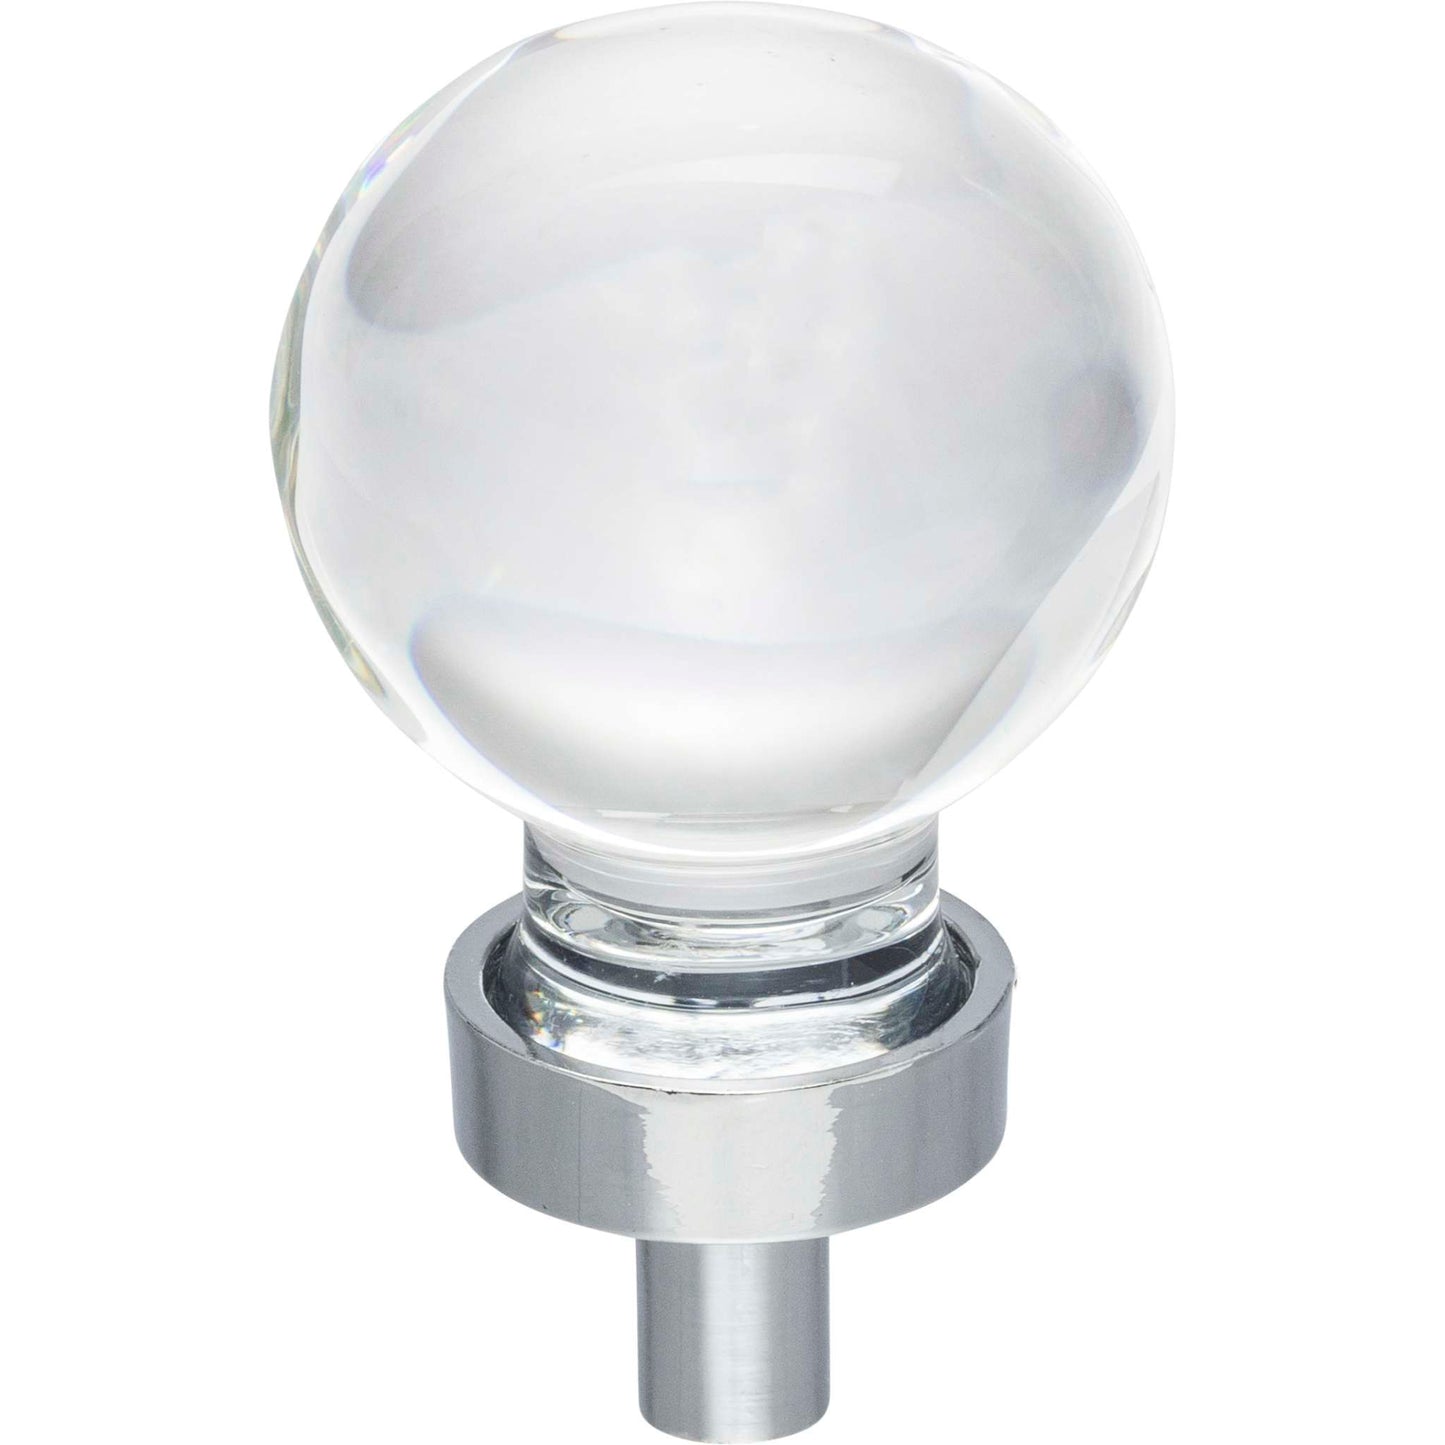 Jeffrey Alexander - Harlow Sphere Glass Cabinet Knob